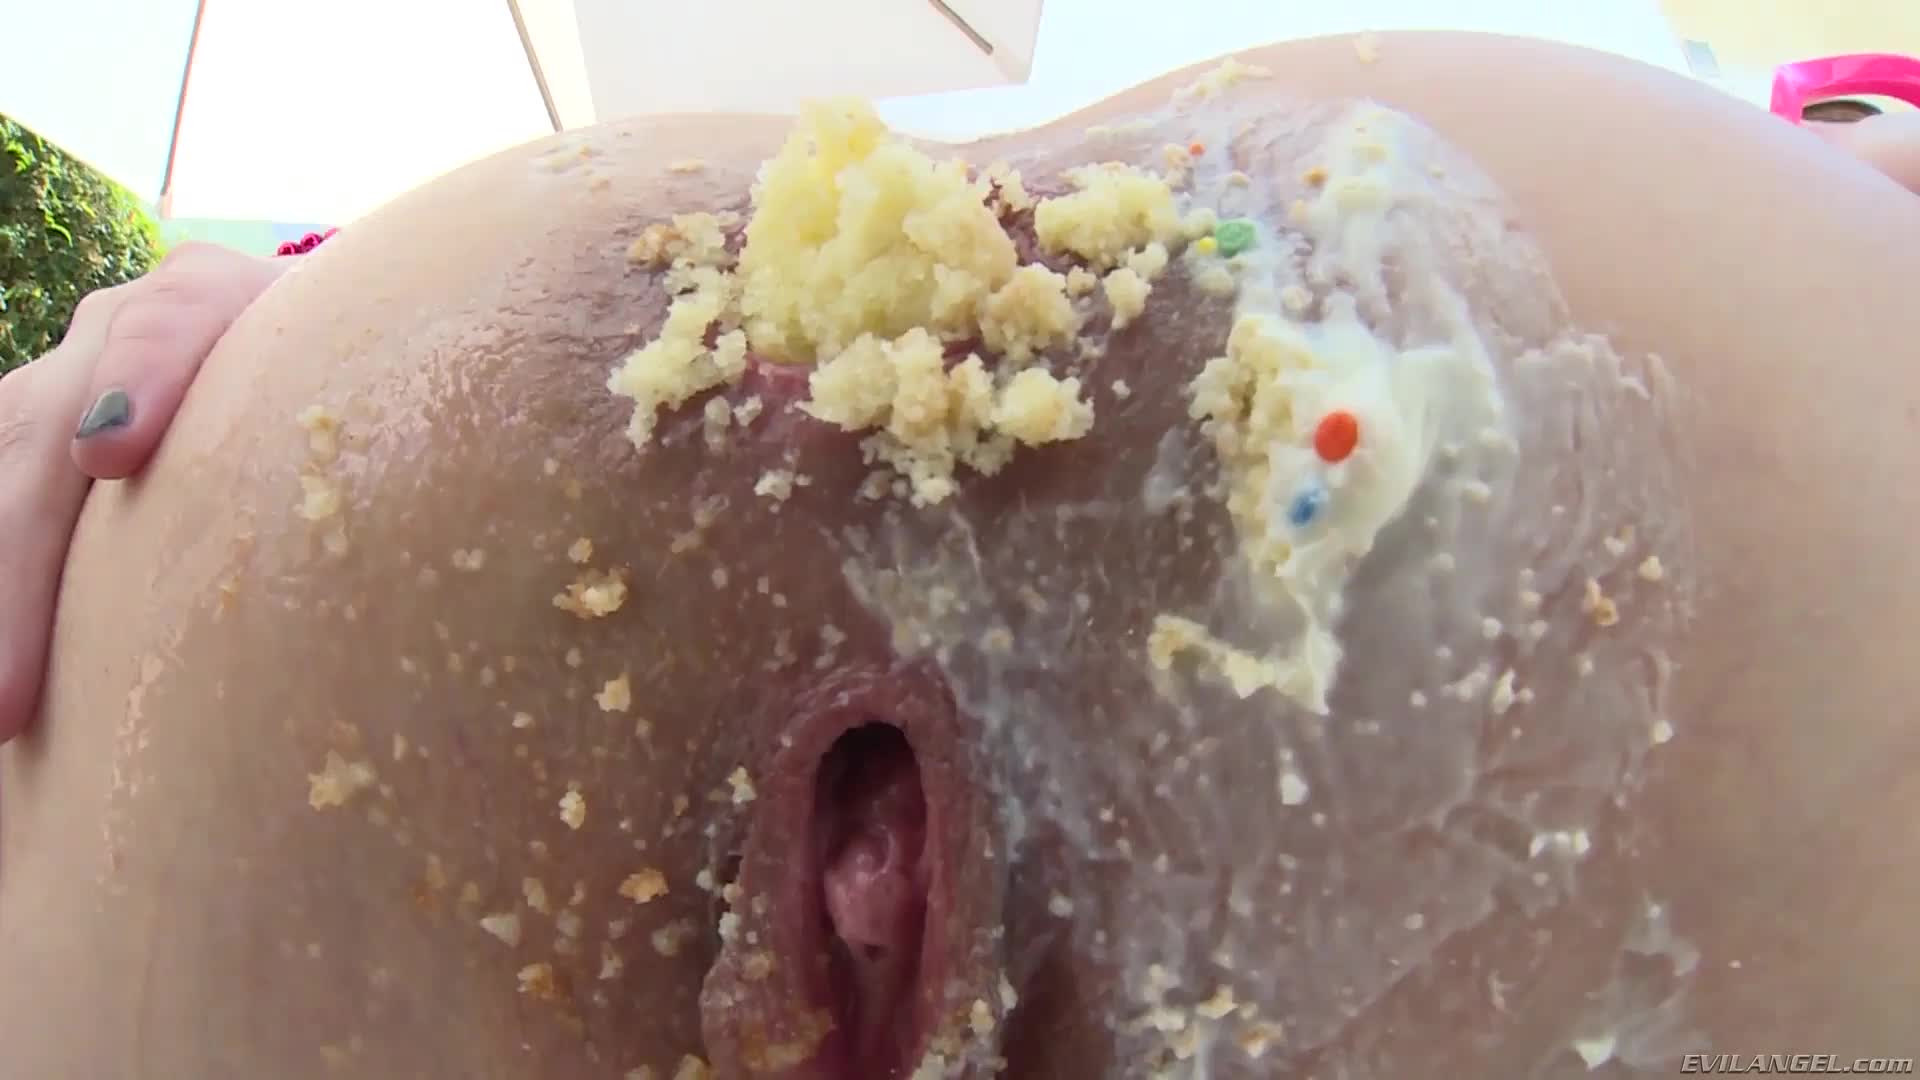 Anal food: Casey Calvert shitting out cupcakes - GIF Video |  nudecelebgifs.com